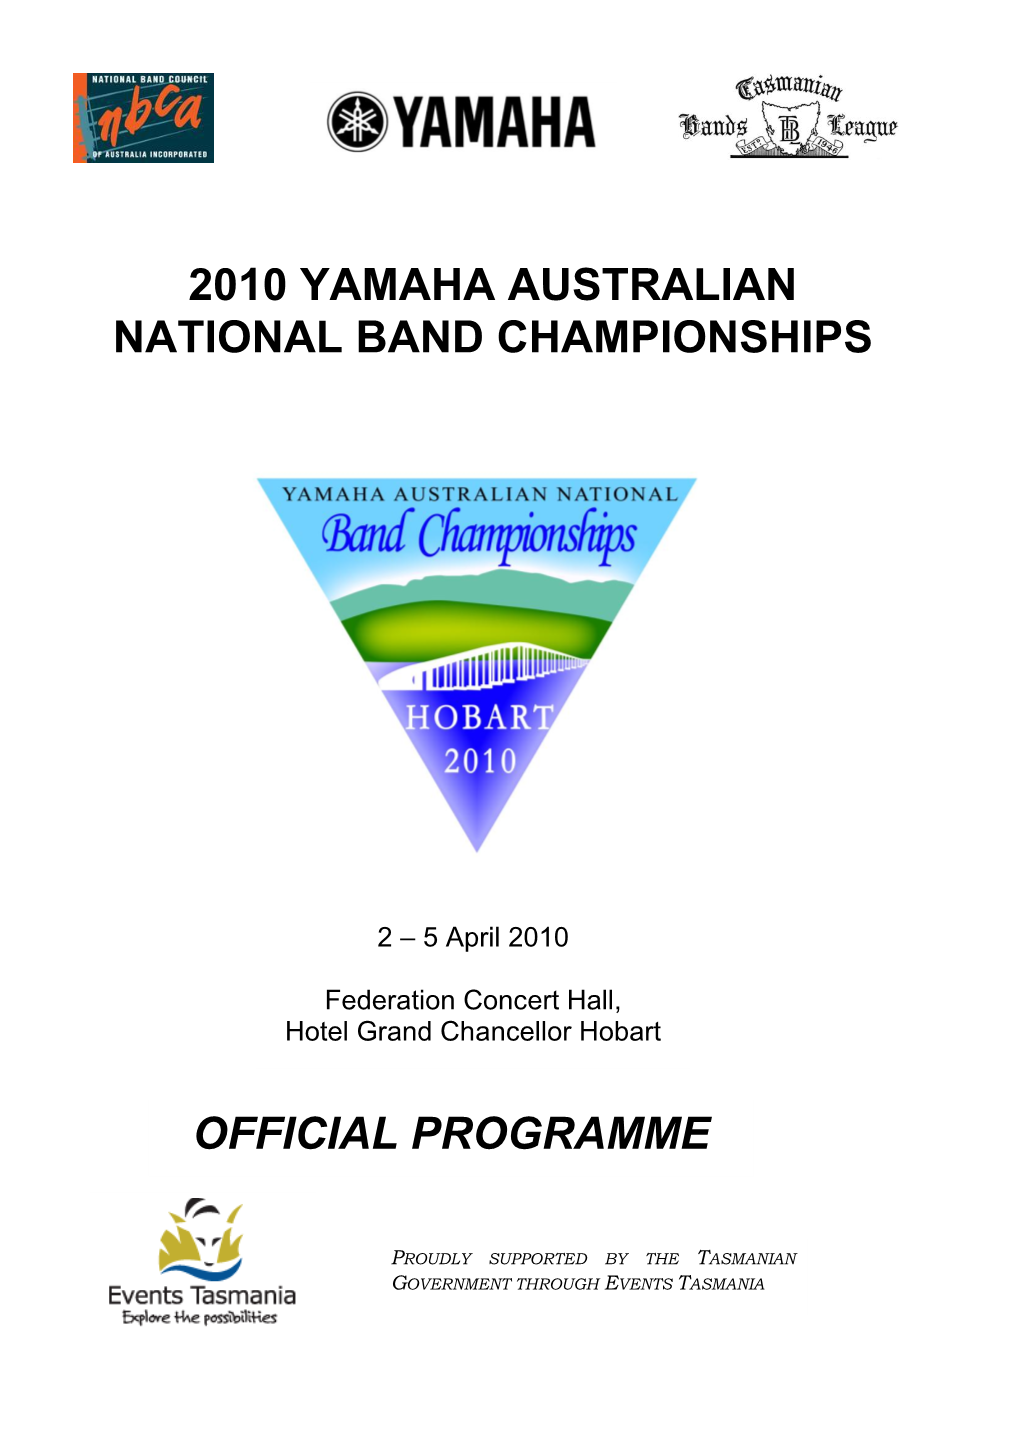 Australian National Band Championships